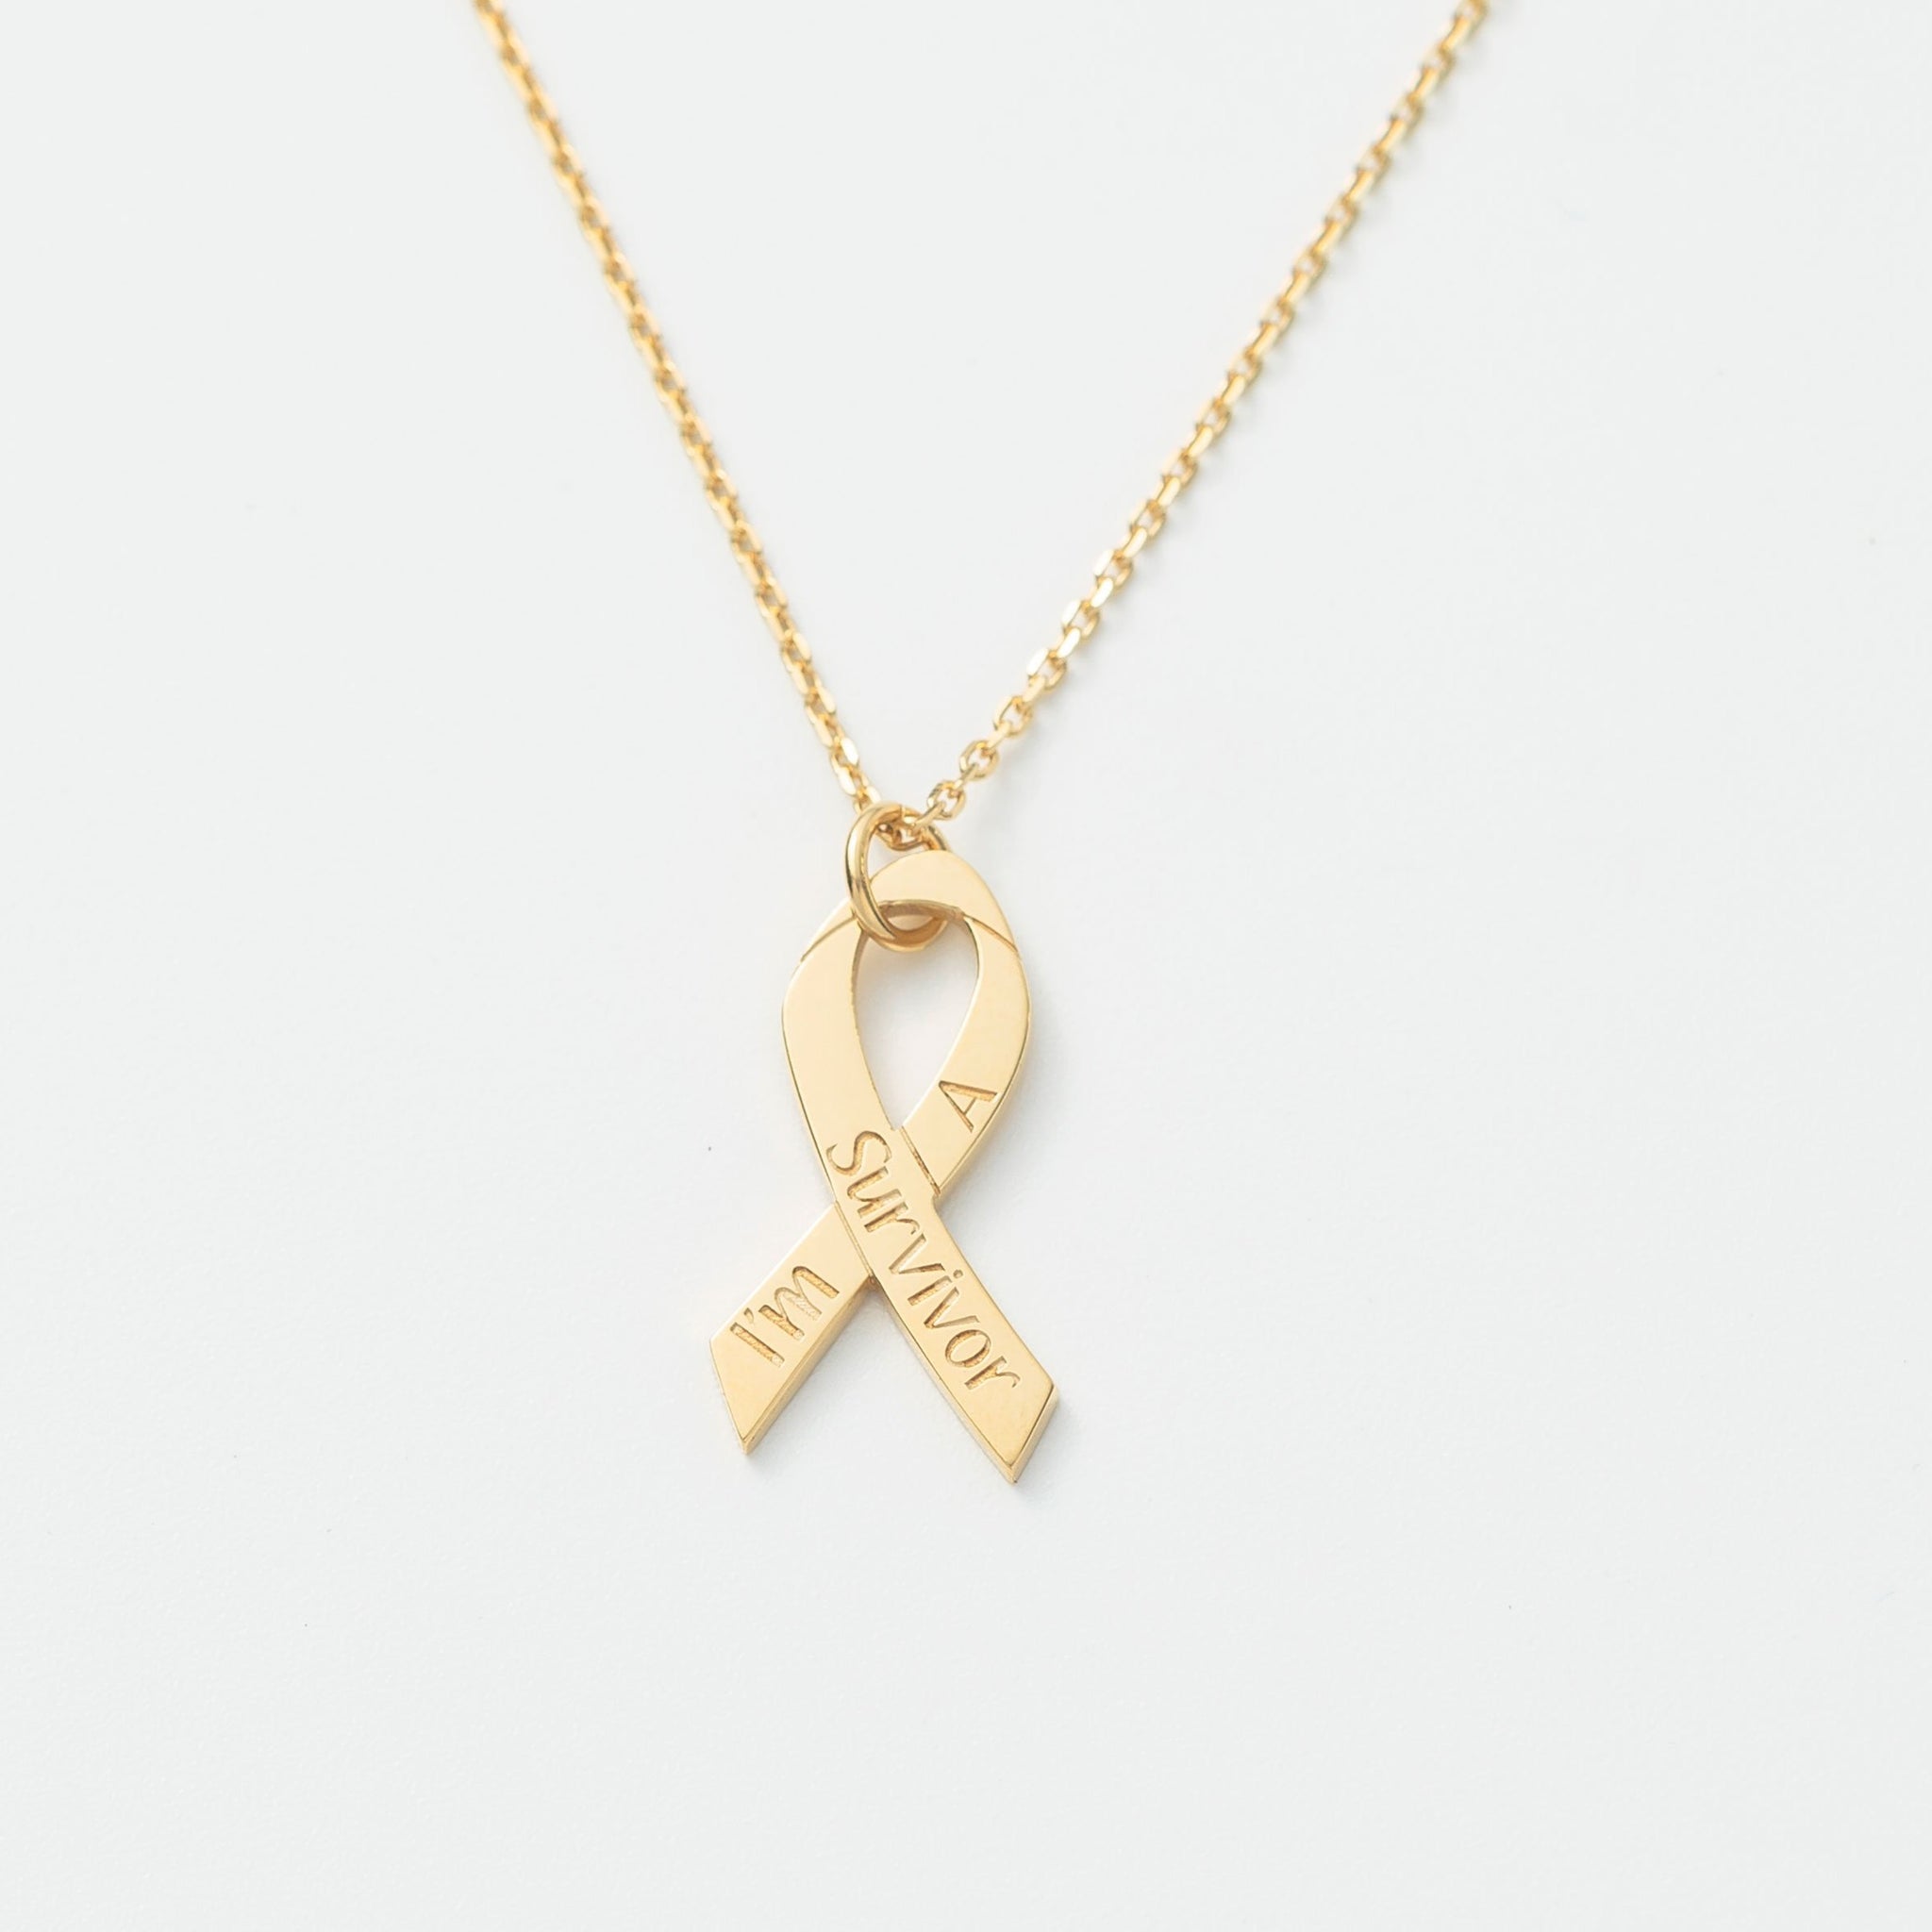 Cancer Awareness Necklace